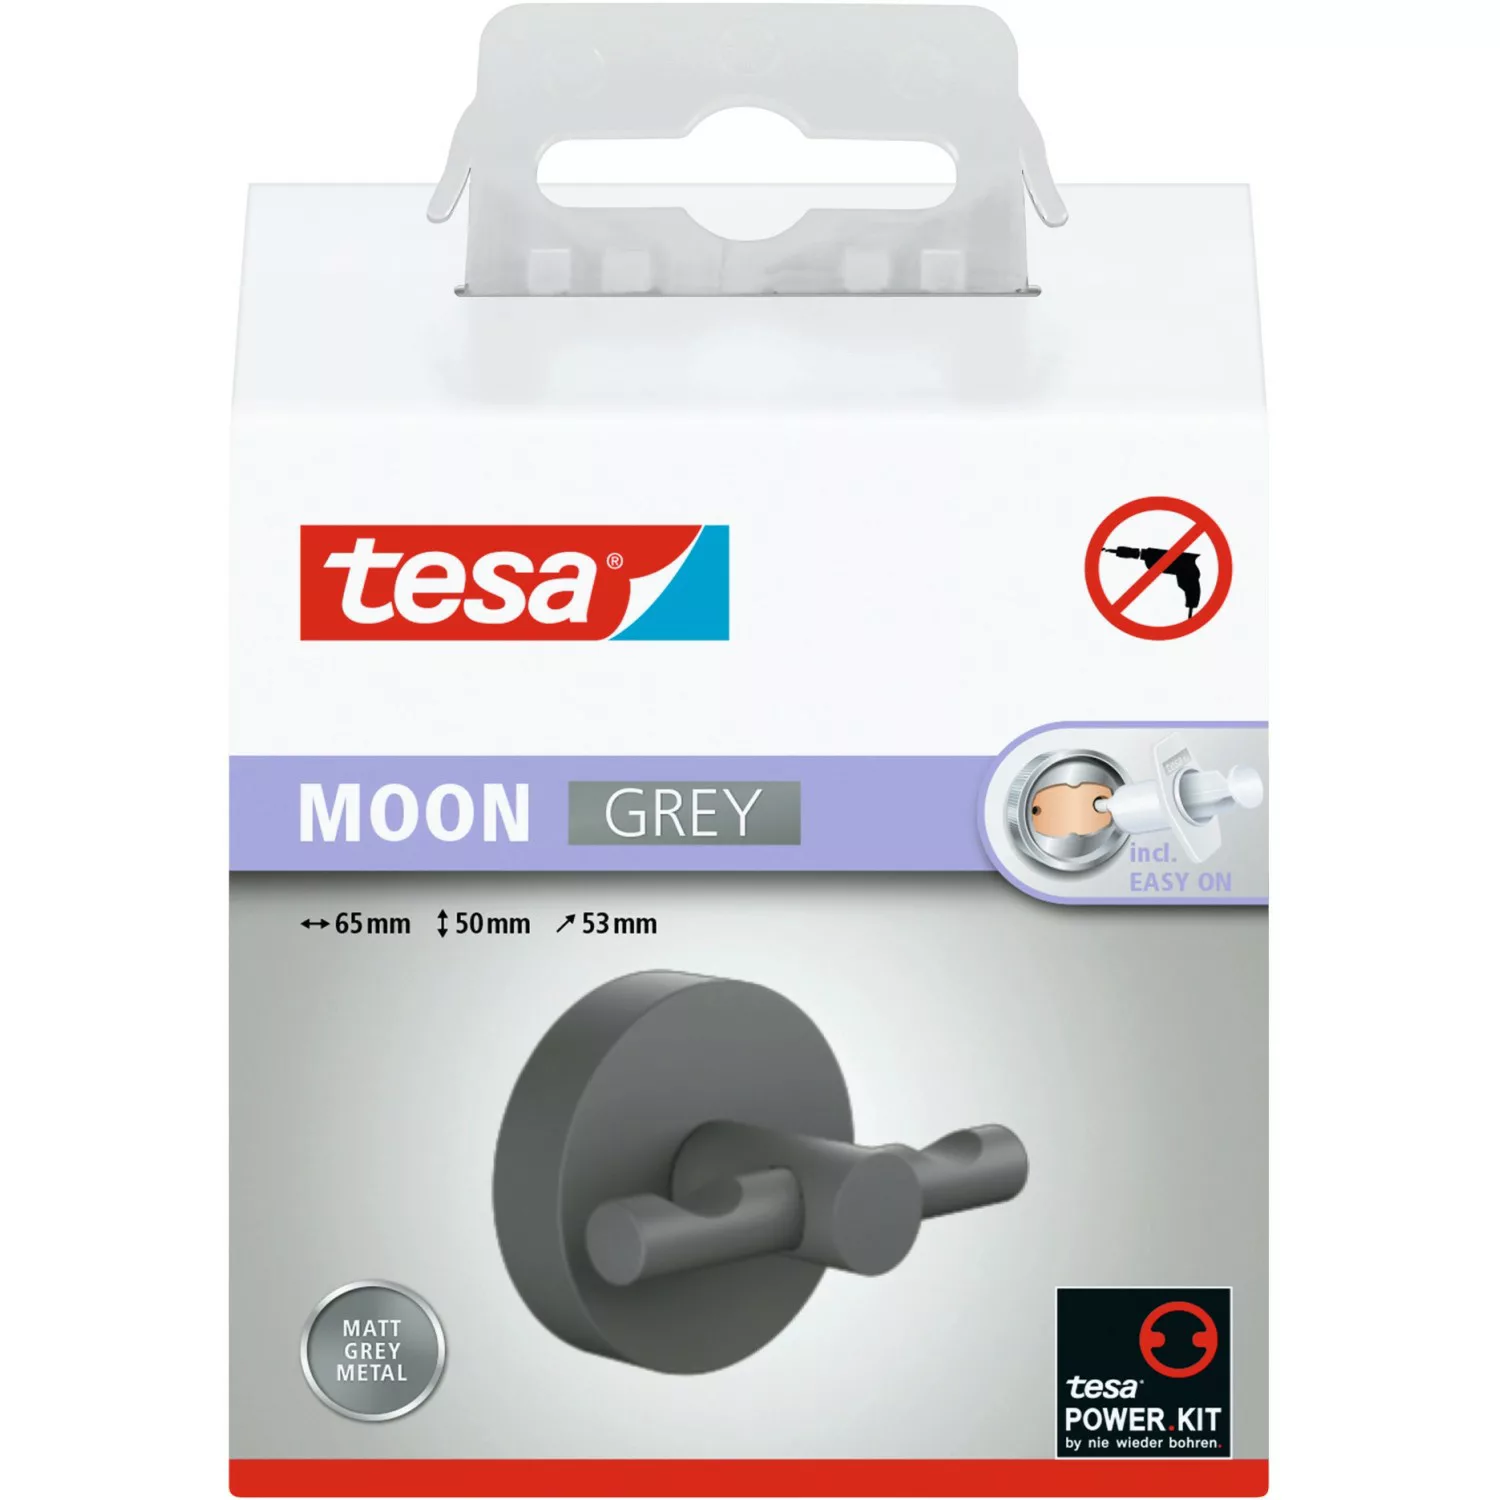 Tesa Moon Grey Bademantelhaken Grau Matt inkl. Klebelösung günstig online kaufen